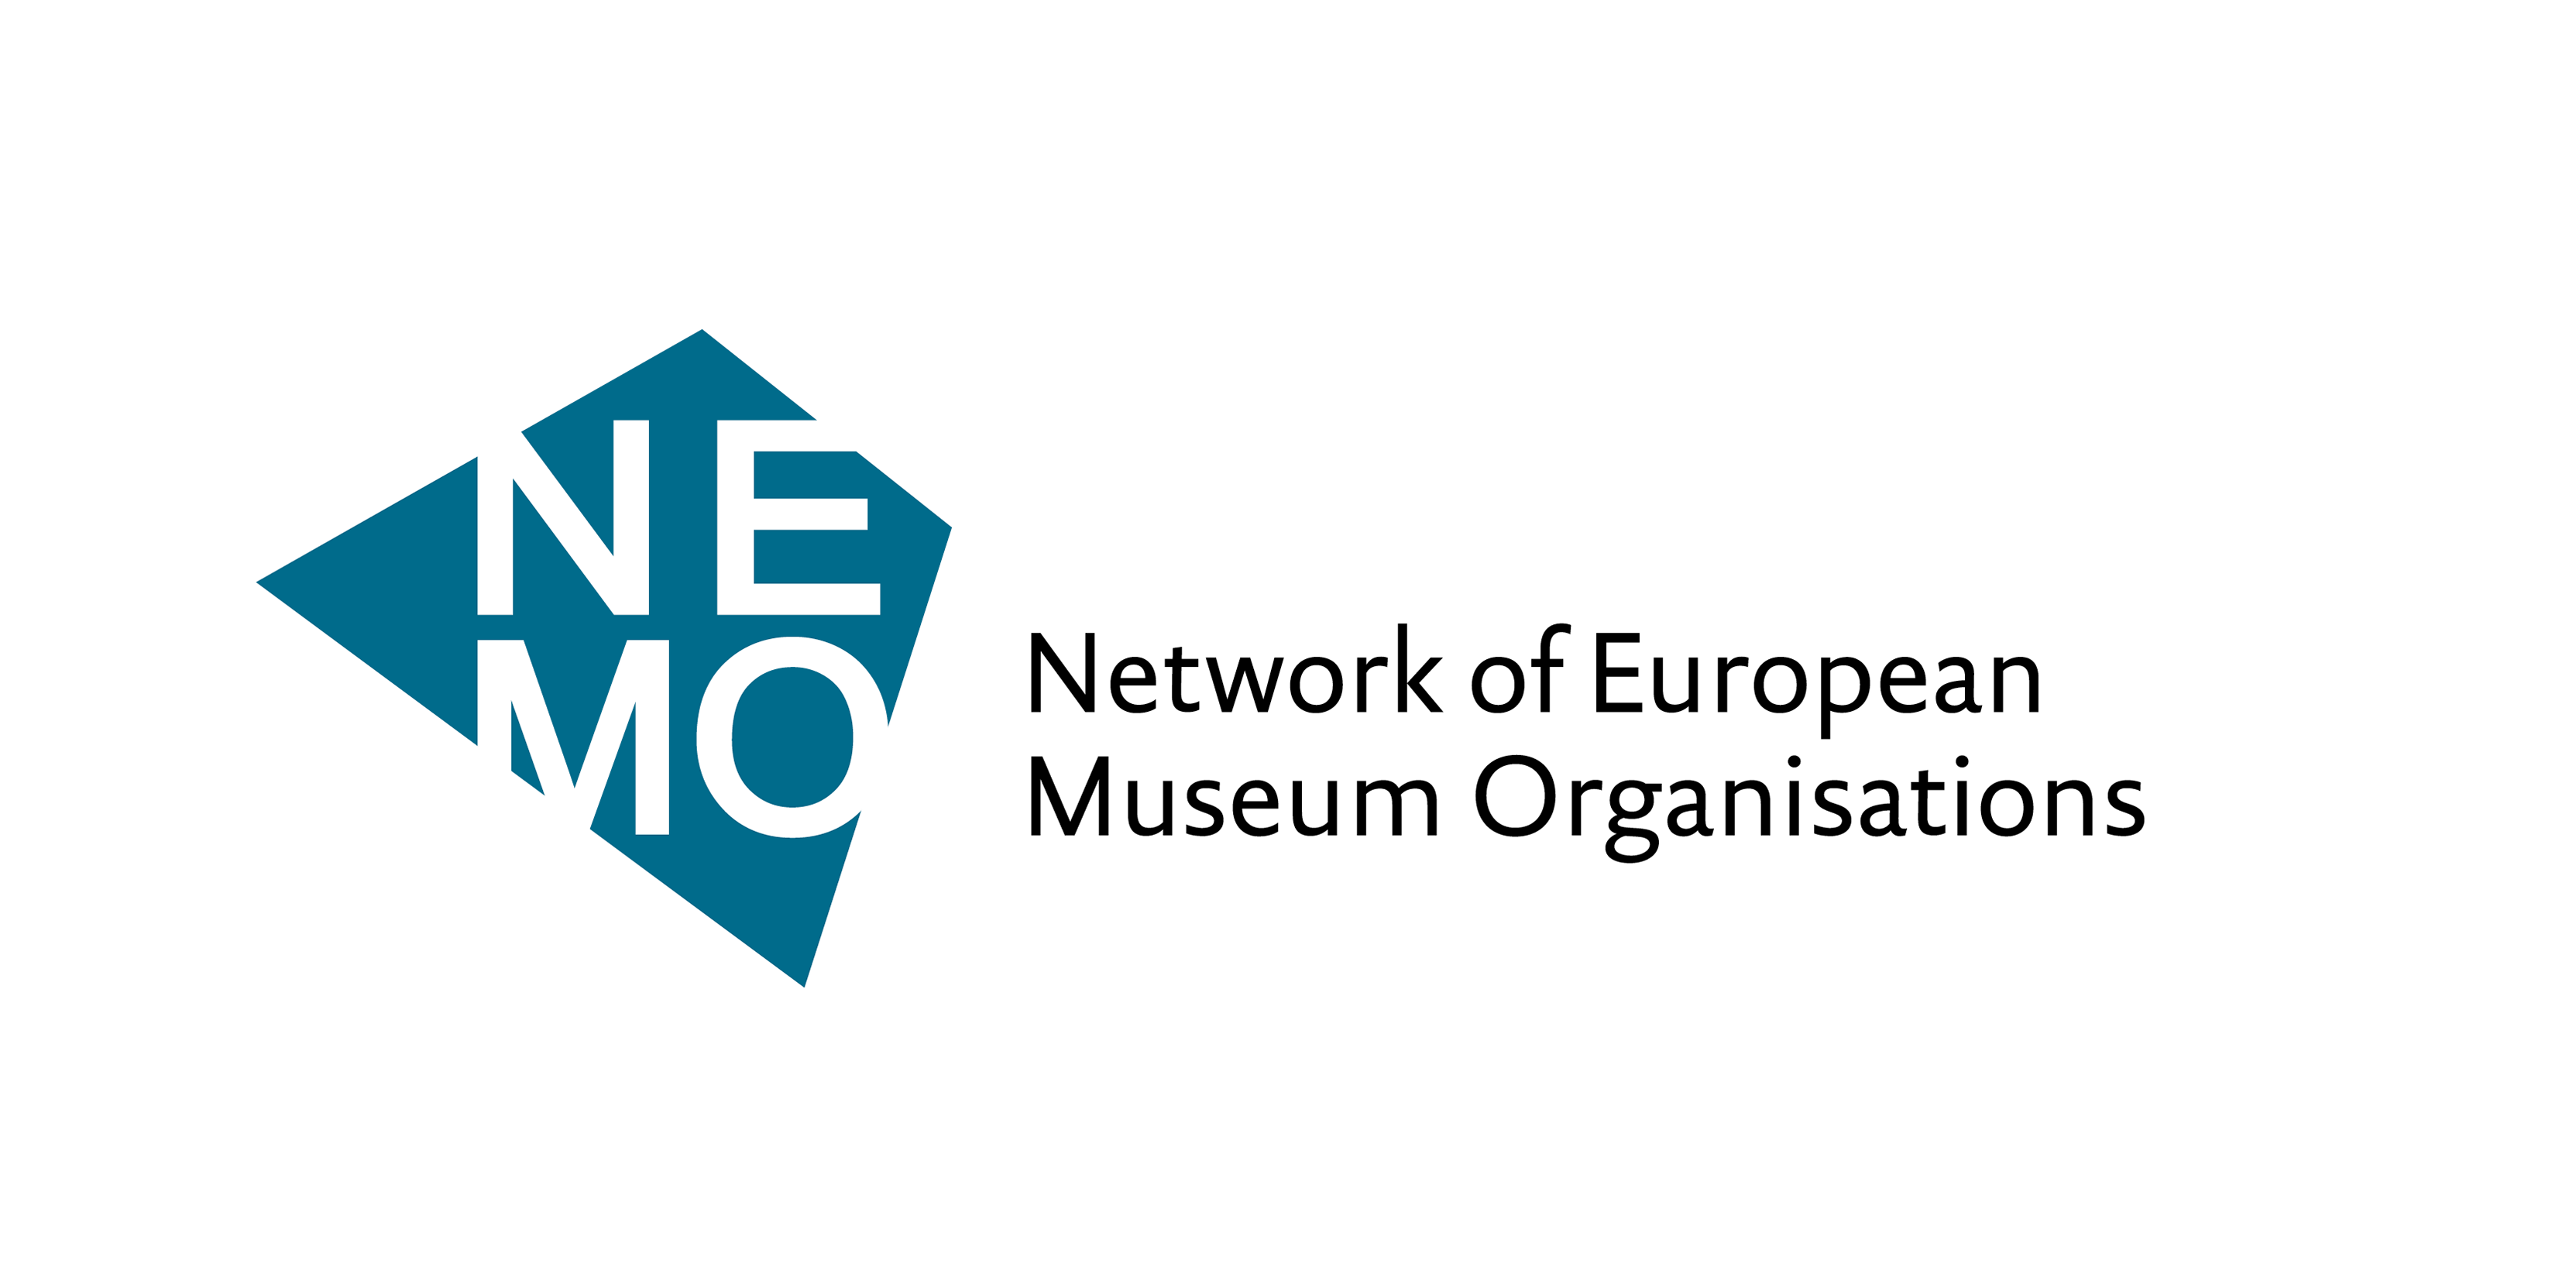 NEMO – The Network of European Museum Organisations